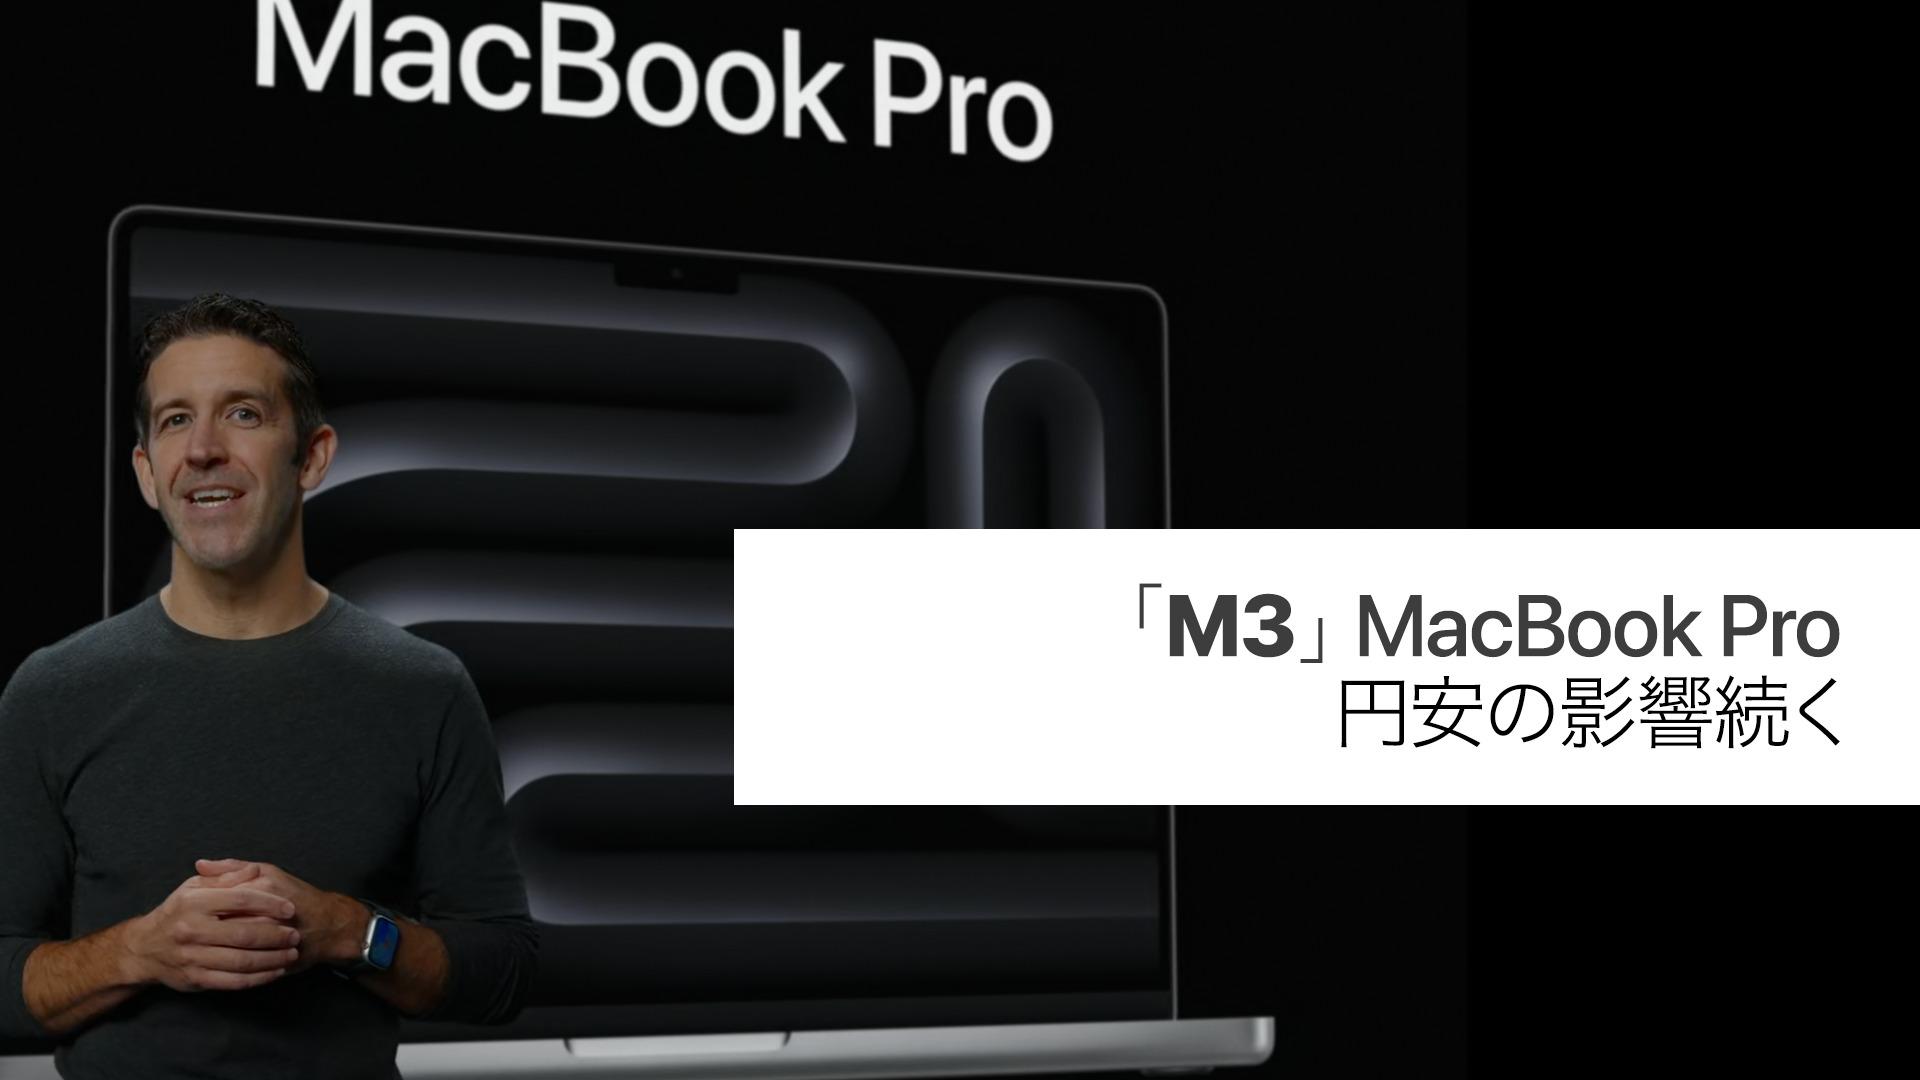 MacBook Pro 15-inch, 2019 MV952J/A | bataan.gov.ph